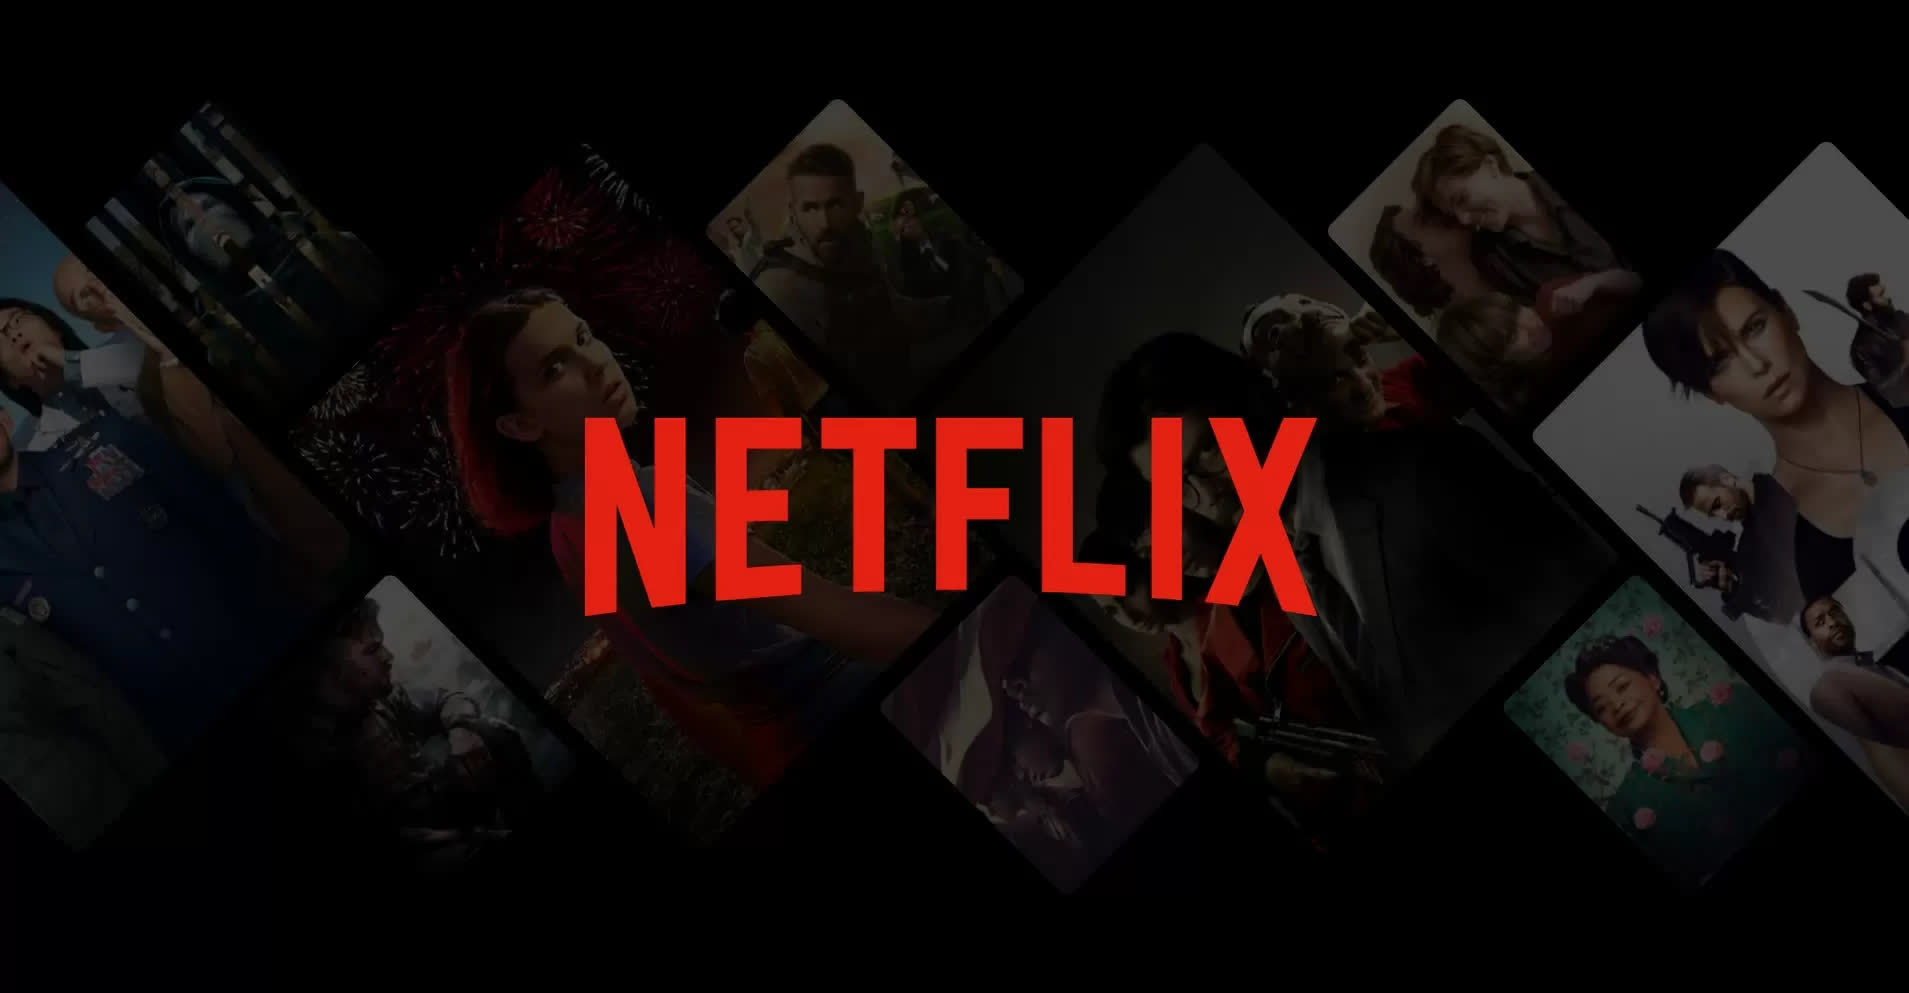 Netflix has surpassed 200 million paid subscribers globally